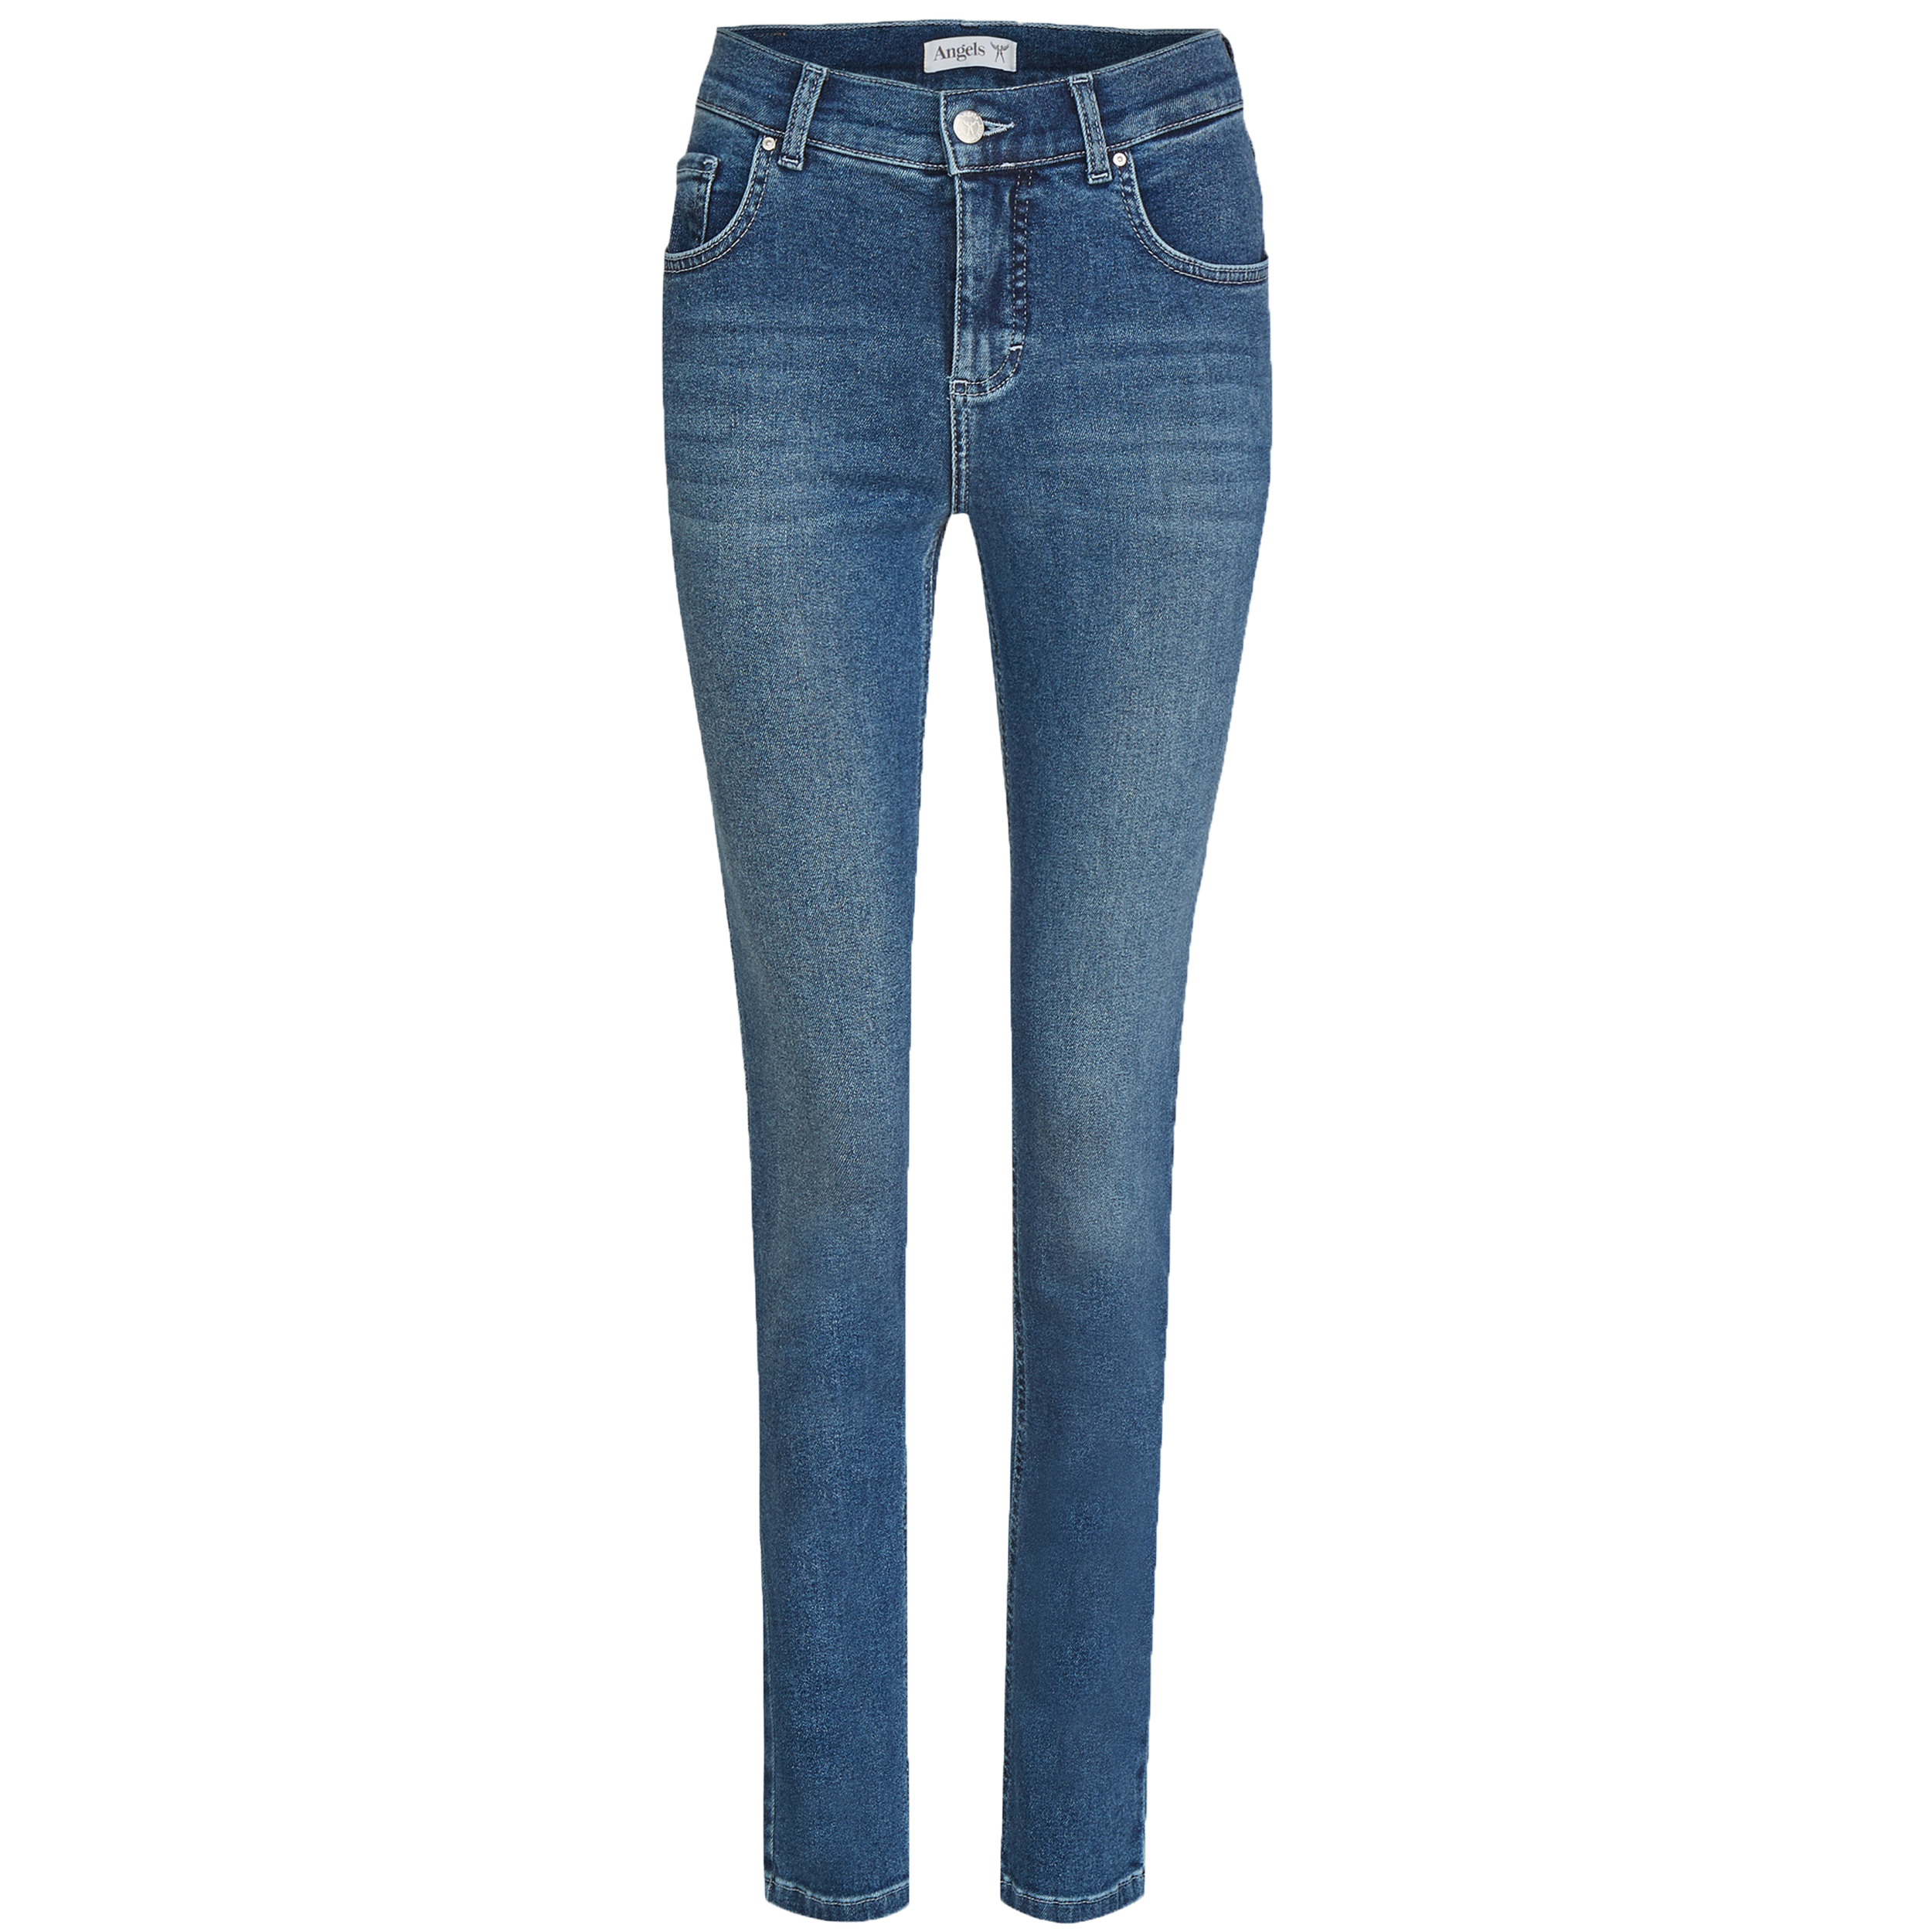 Angels Damen Jeans Skinny - mid blue 42/30